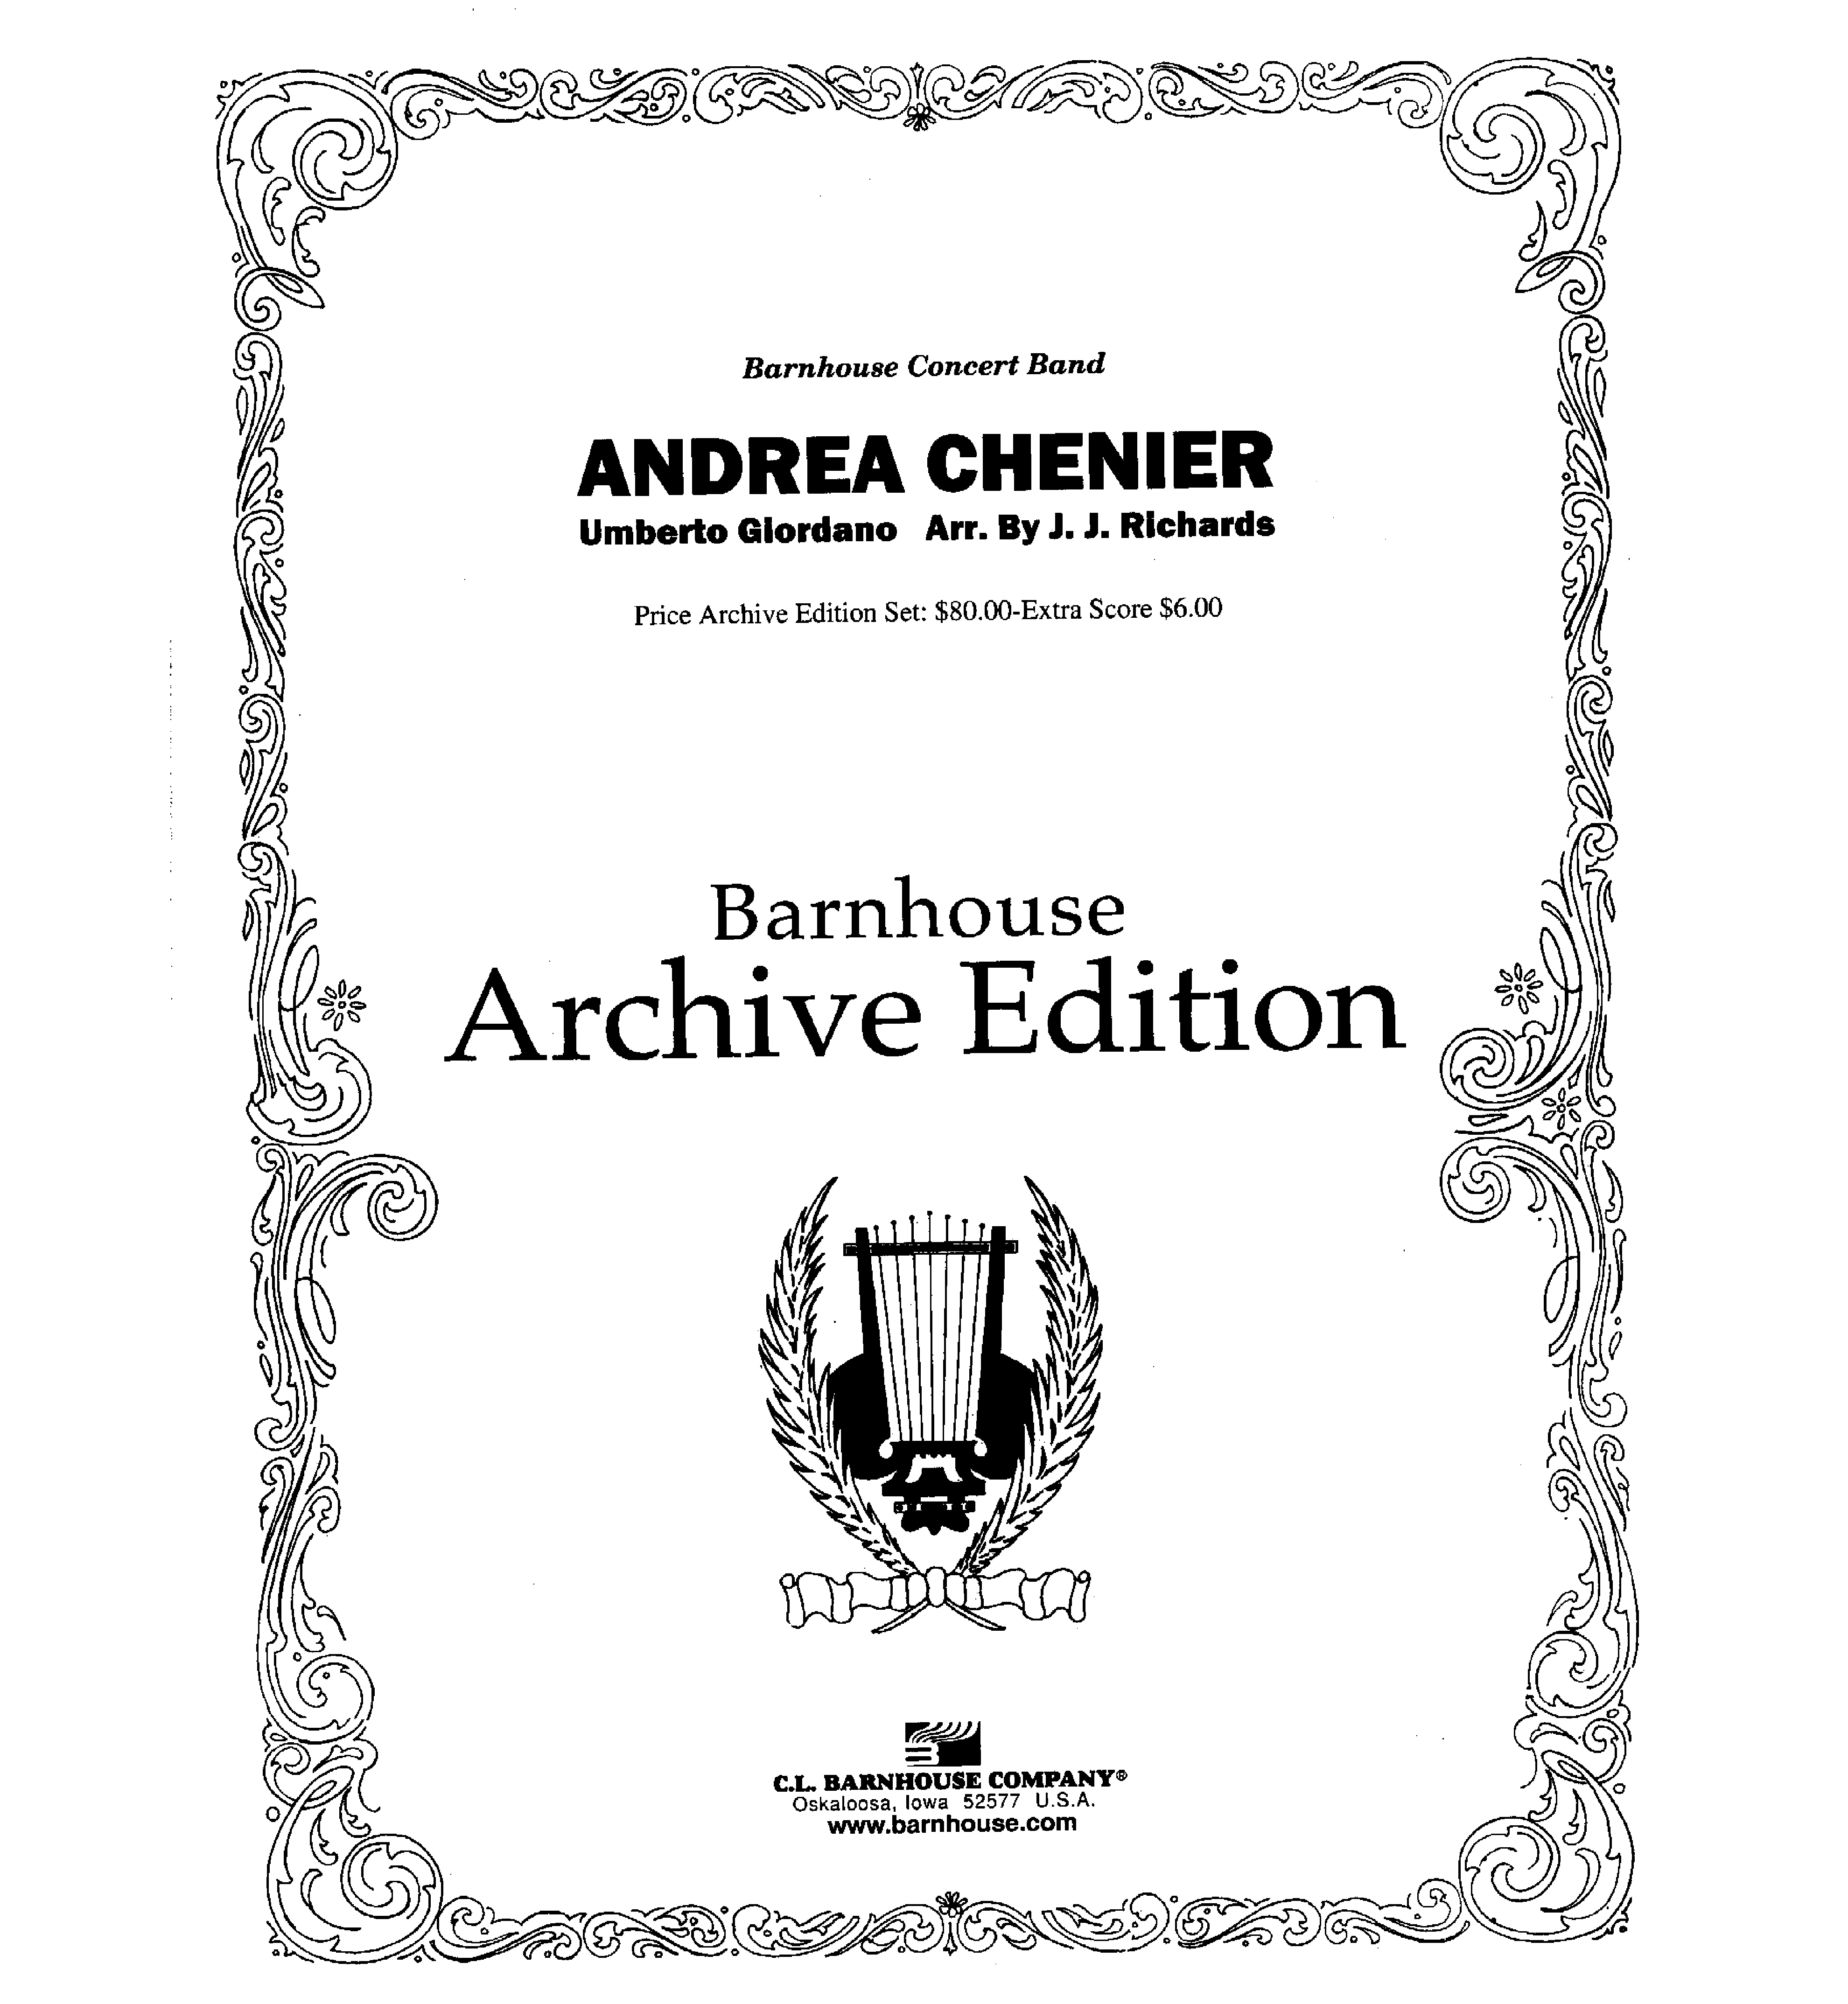 ANDREA CHENIER SELECTIONS ARCHIVE